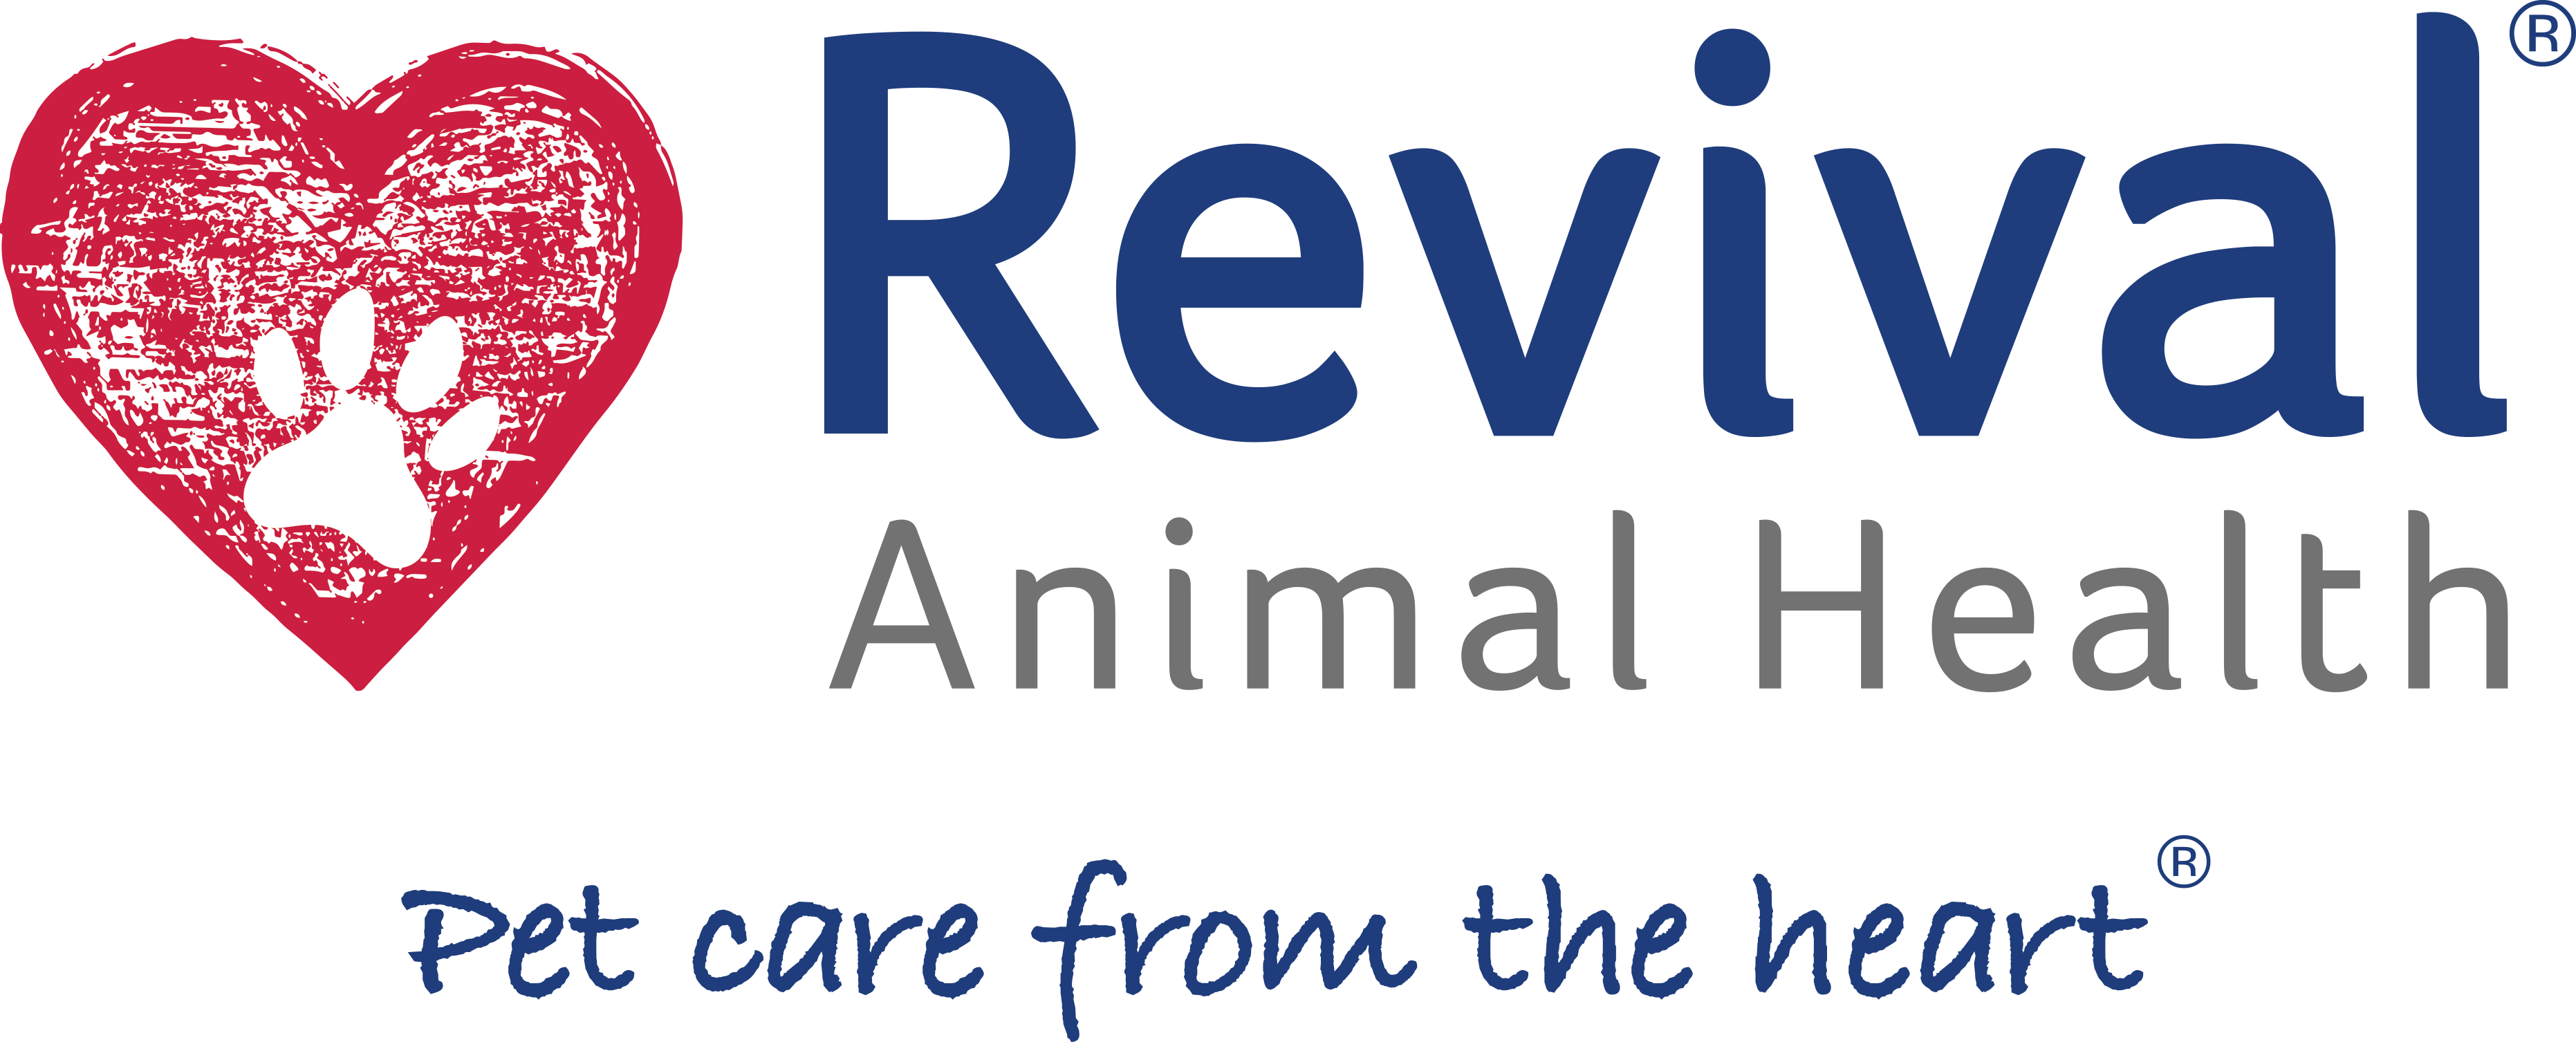 Revival Animal Health, Inc Profile